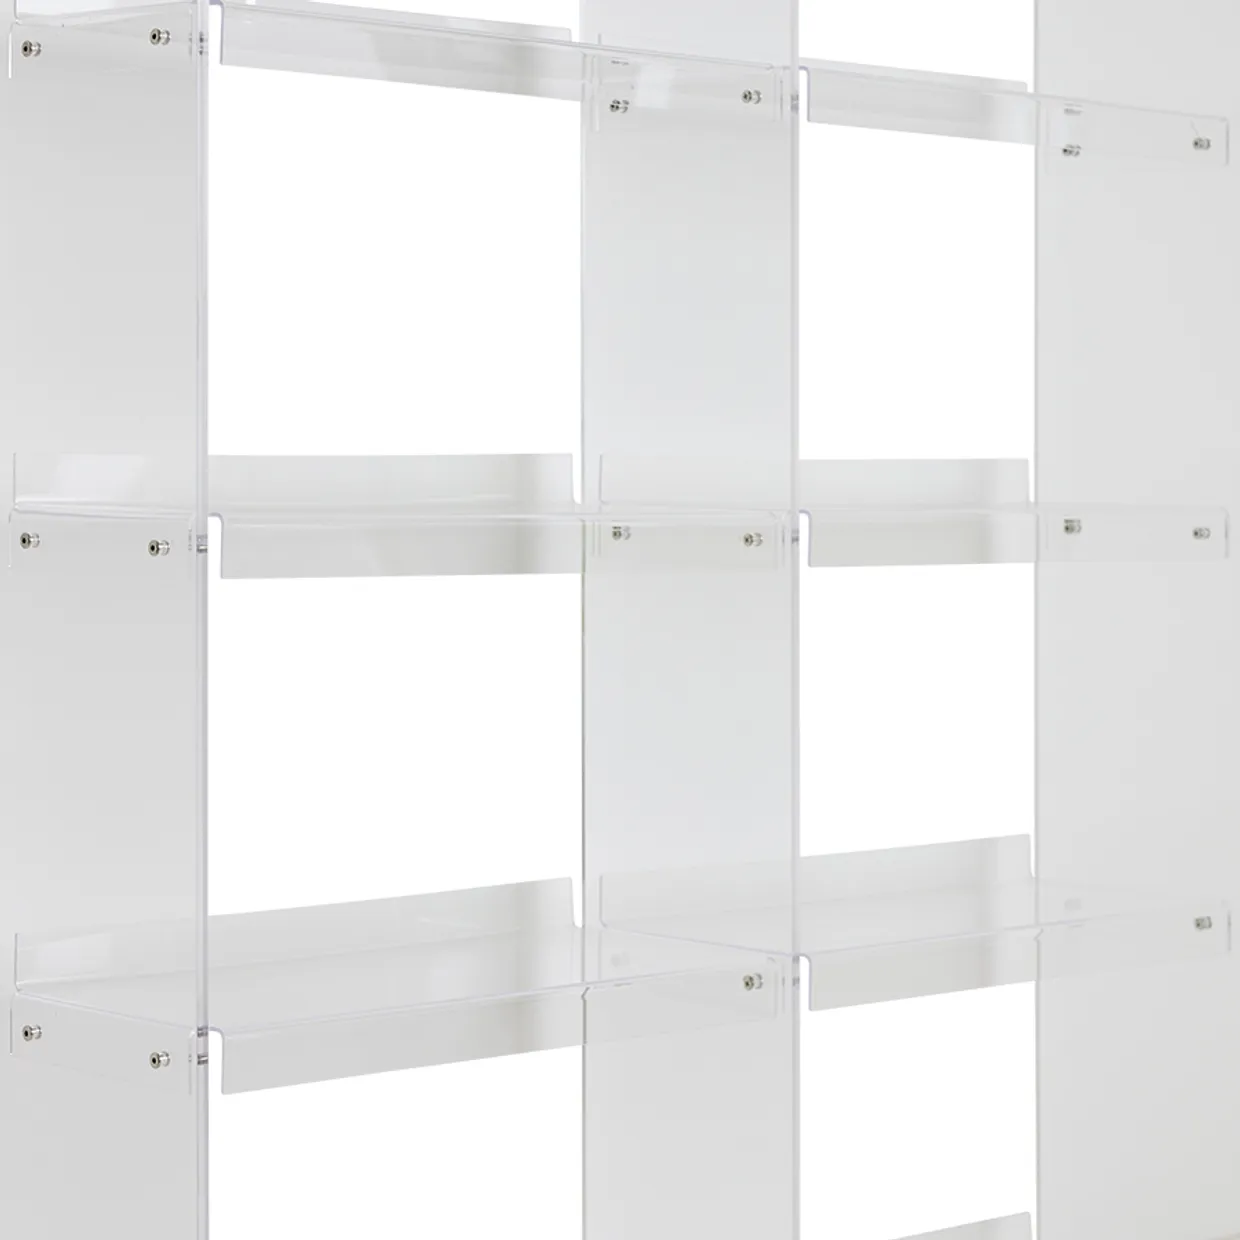 Acrylic cabinet 160cm, clear